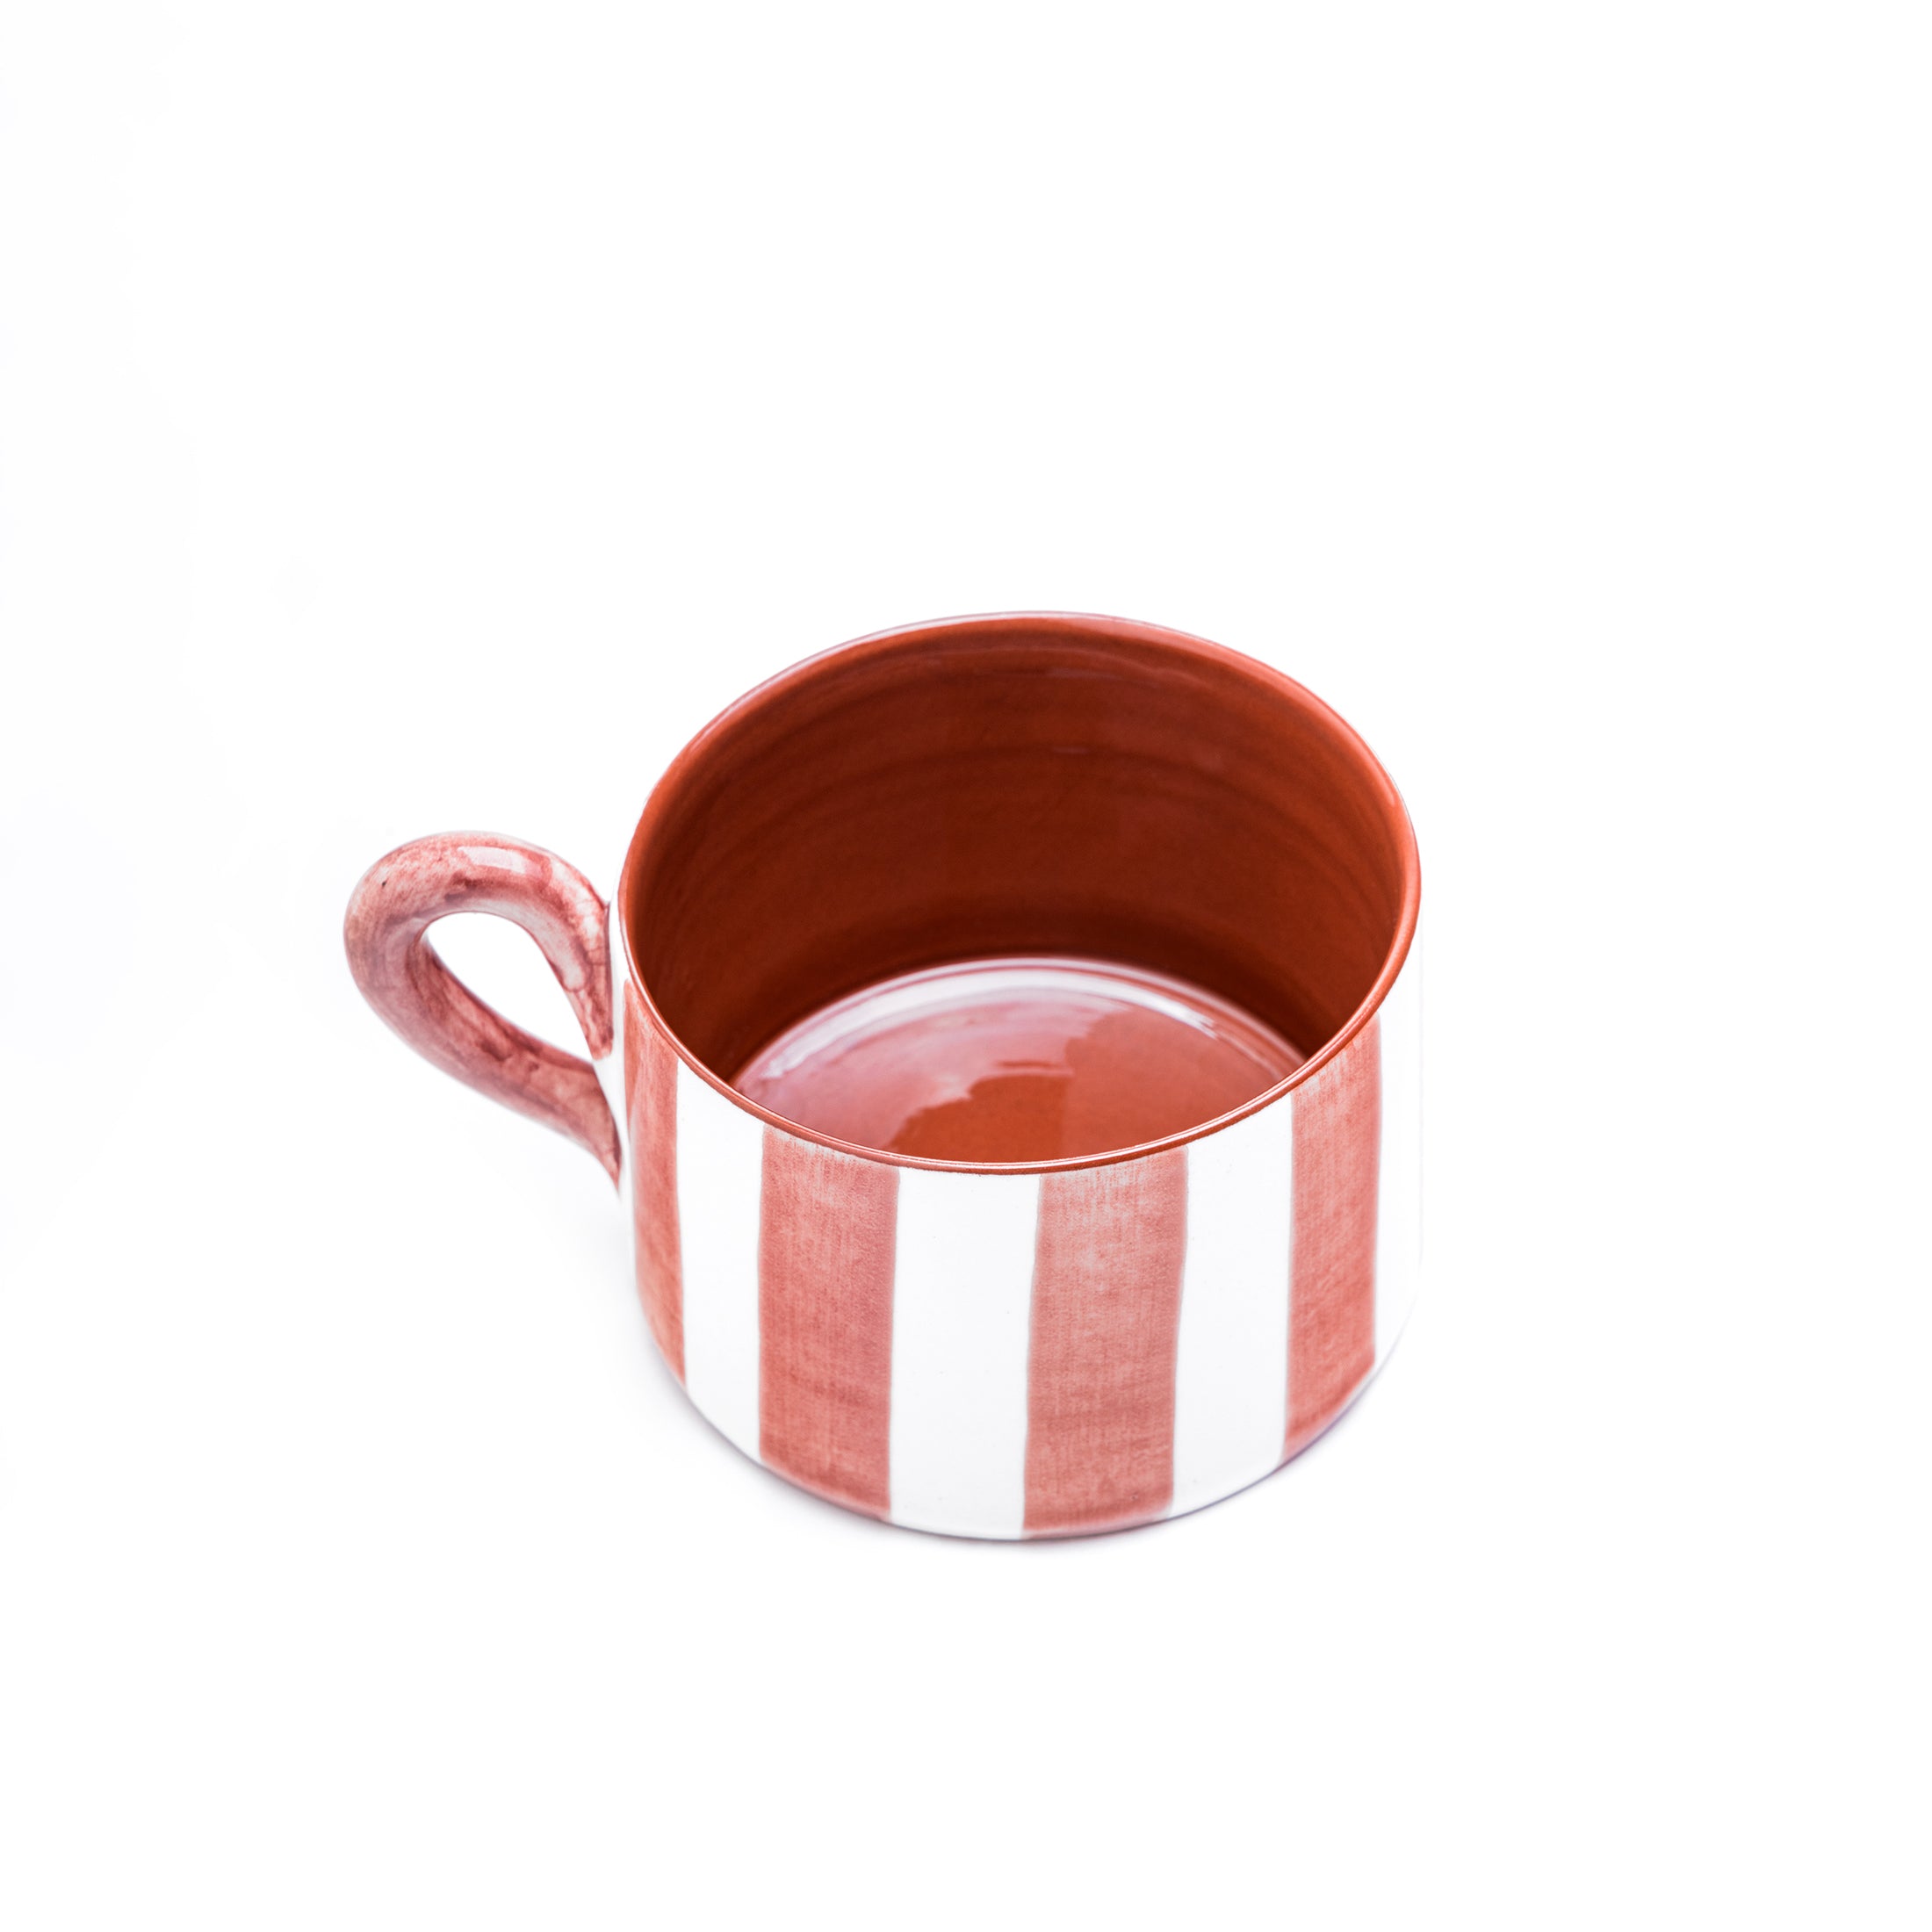 Herring & Bones - Concept Store Joyeux - Casa Cubista - Mugs - Grand mug "Bold"